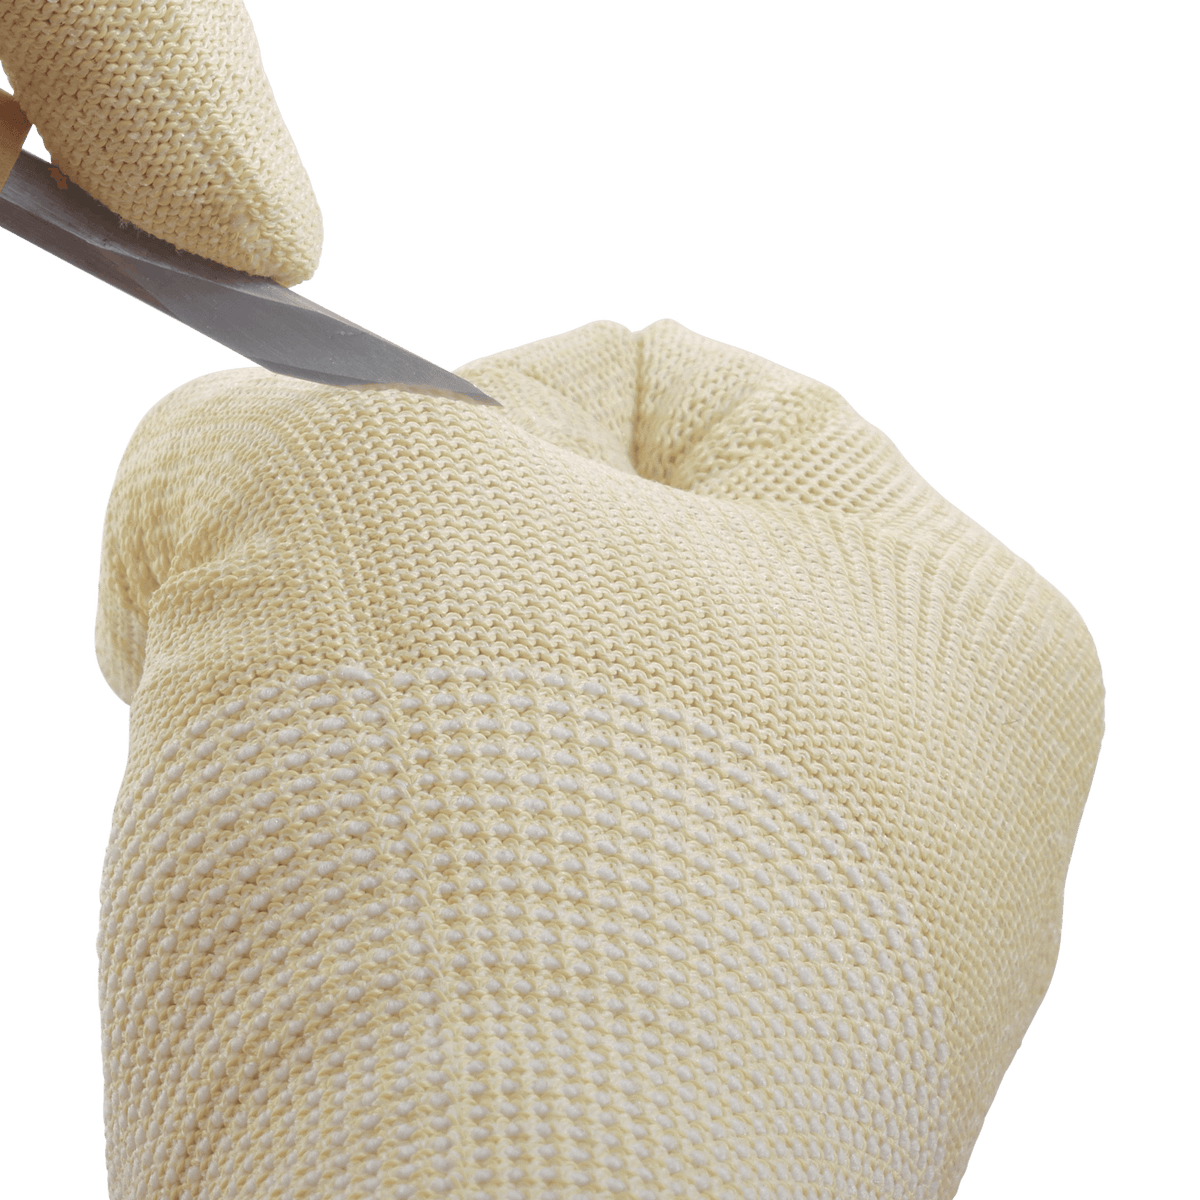 Japanese Carving Gloves